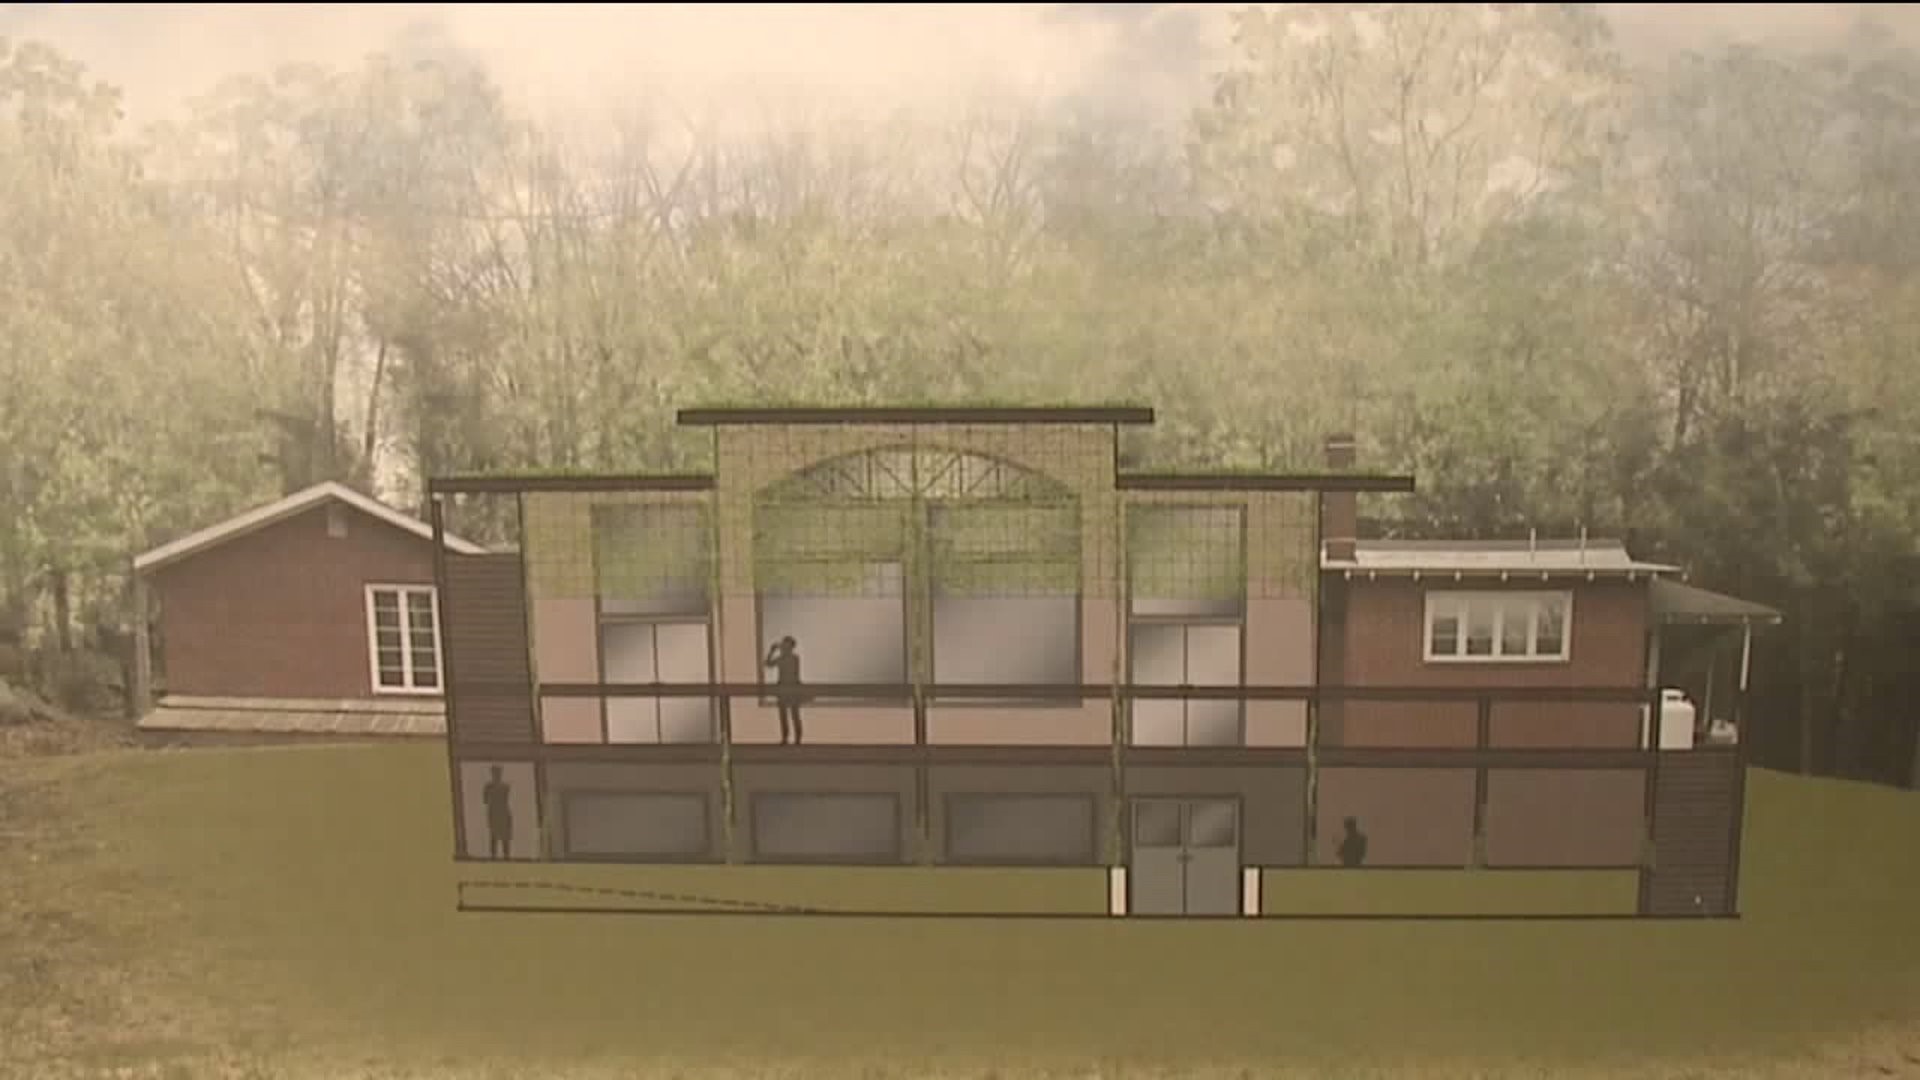 Education Center Planned at Lackawac Sanctuary